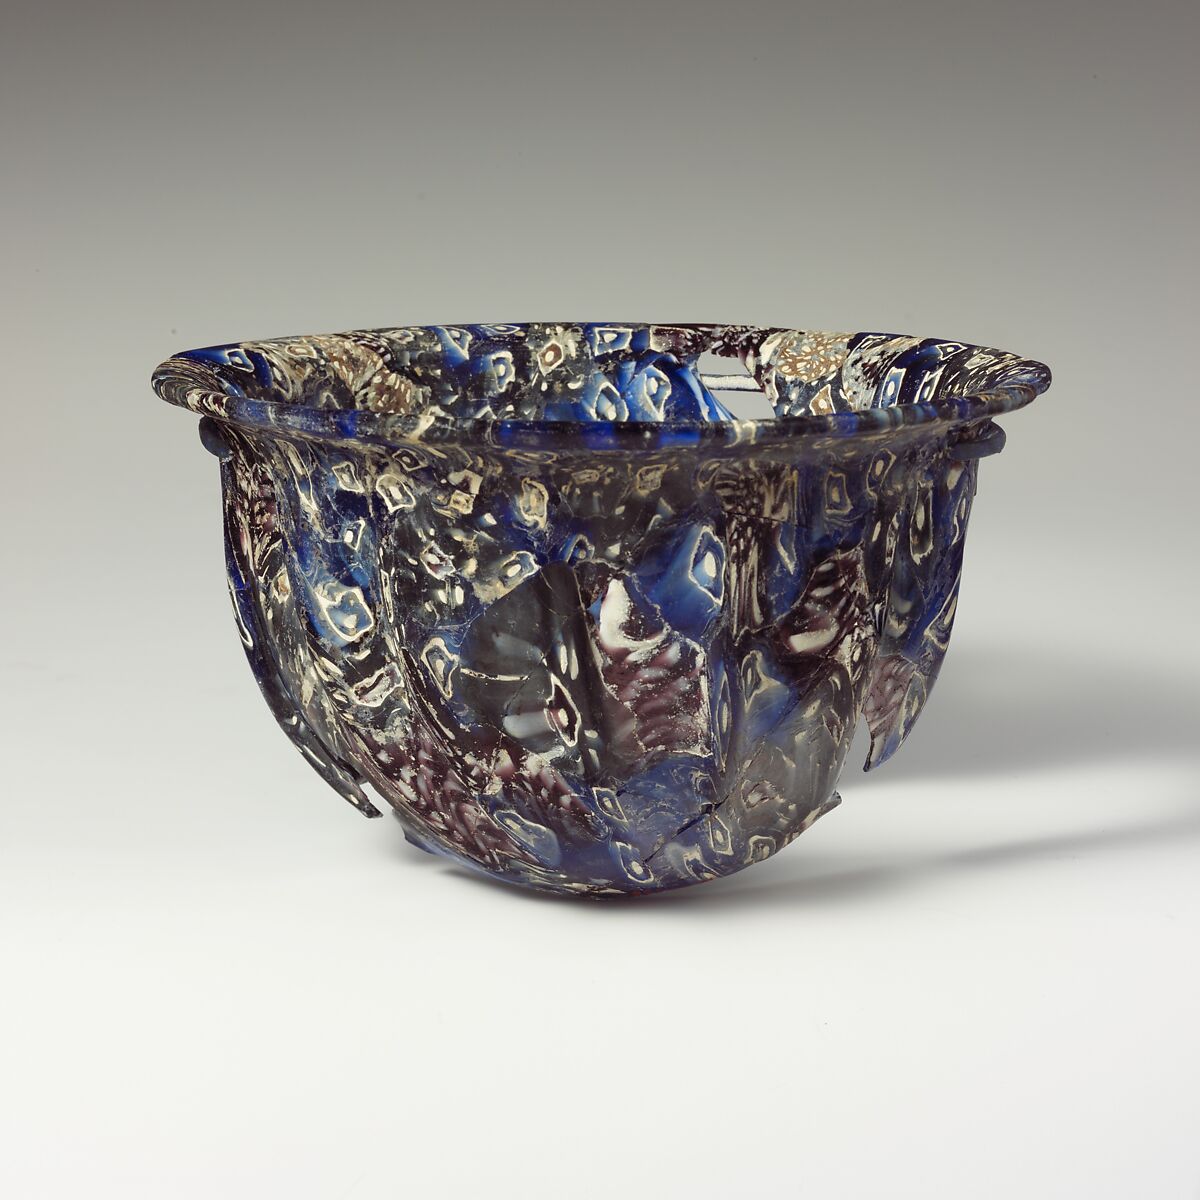 Ribbed mosaic glass bowl, Glass, Roman, probably Italian 